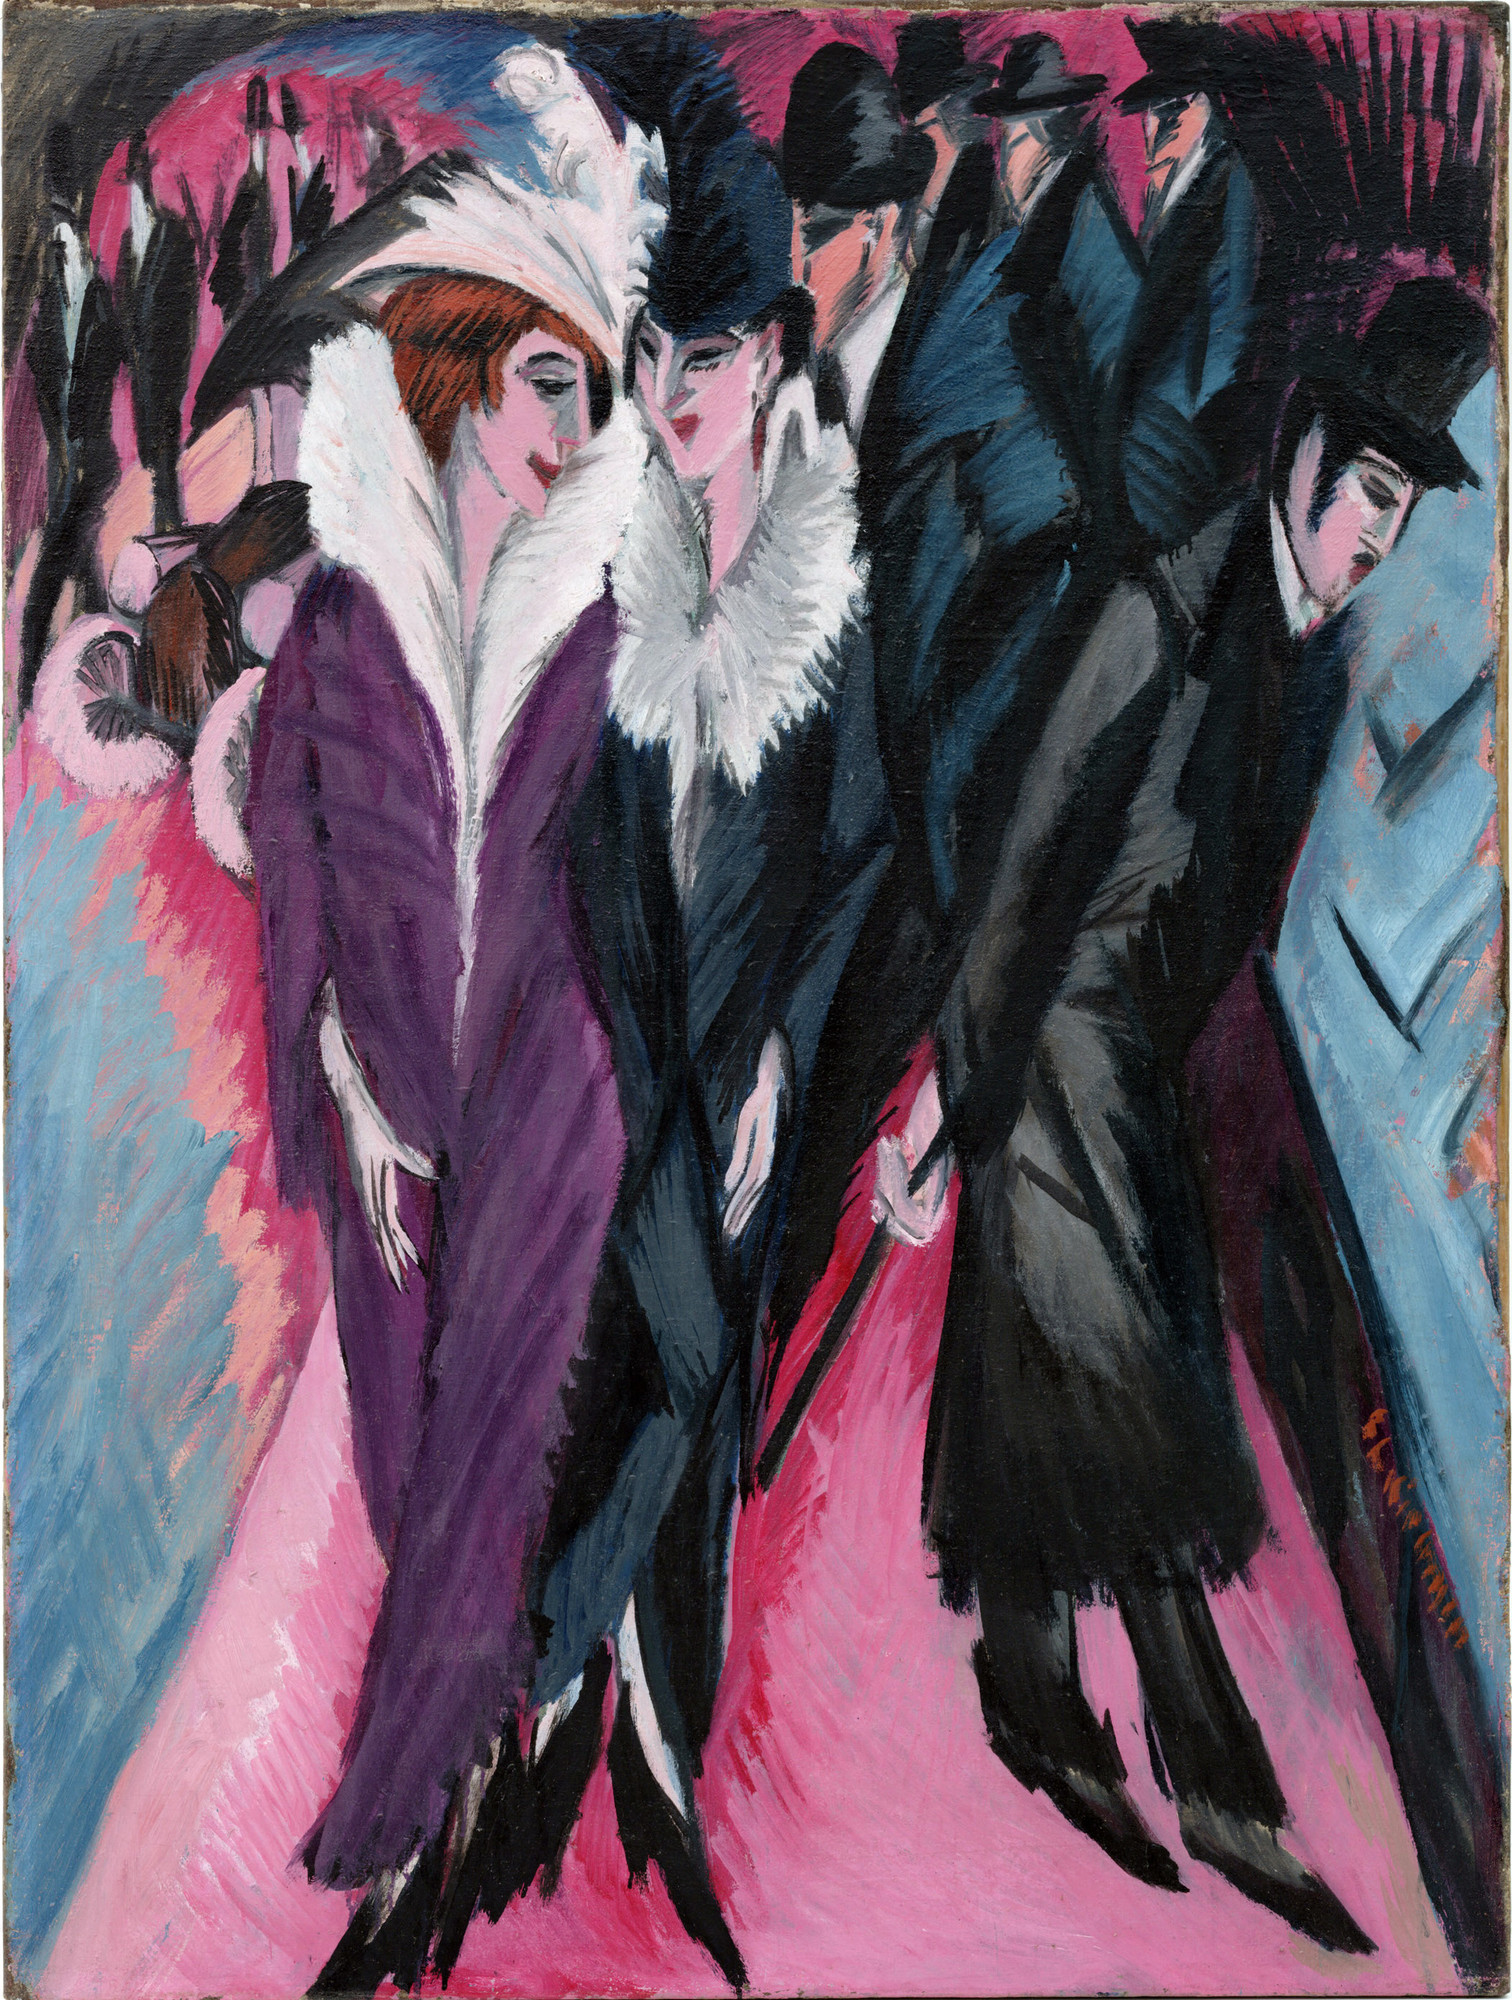 Ernst Ludwig Kirchner. _Street, Berlin (Straße, Berlin)._ 1913. Oil on canvas, 47 1/2 x 35 7/8" (120.6 x 91.1 cm). The Museum of Modern Art. Purchase. © 2008 Ingeborg and Dr. Wolfgang Henze-Ketterer, Wichtrach/Bern